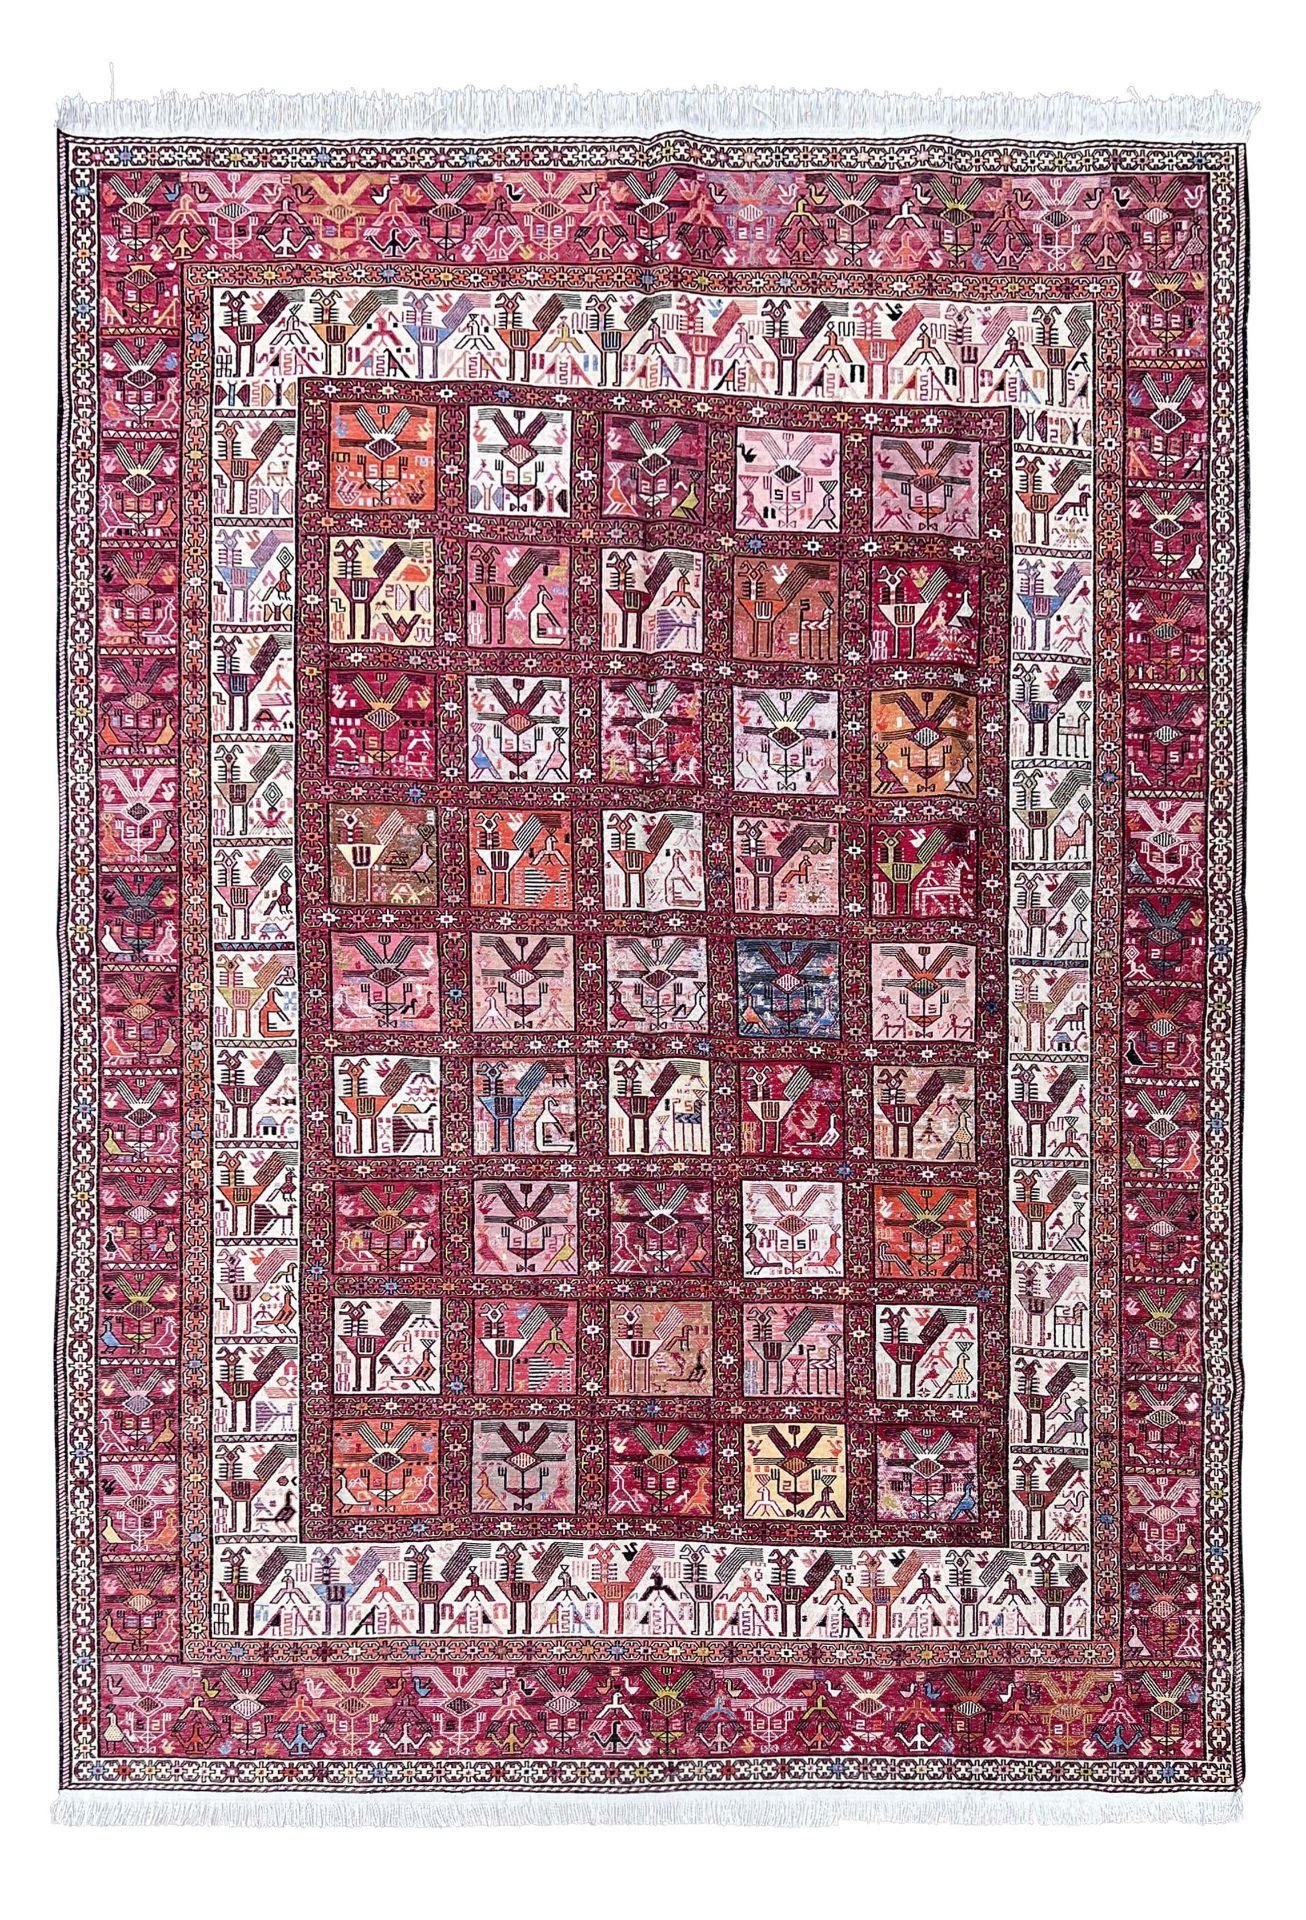 Sumakh. Silk. Oriental carpet. 2nd half of the 20th century.